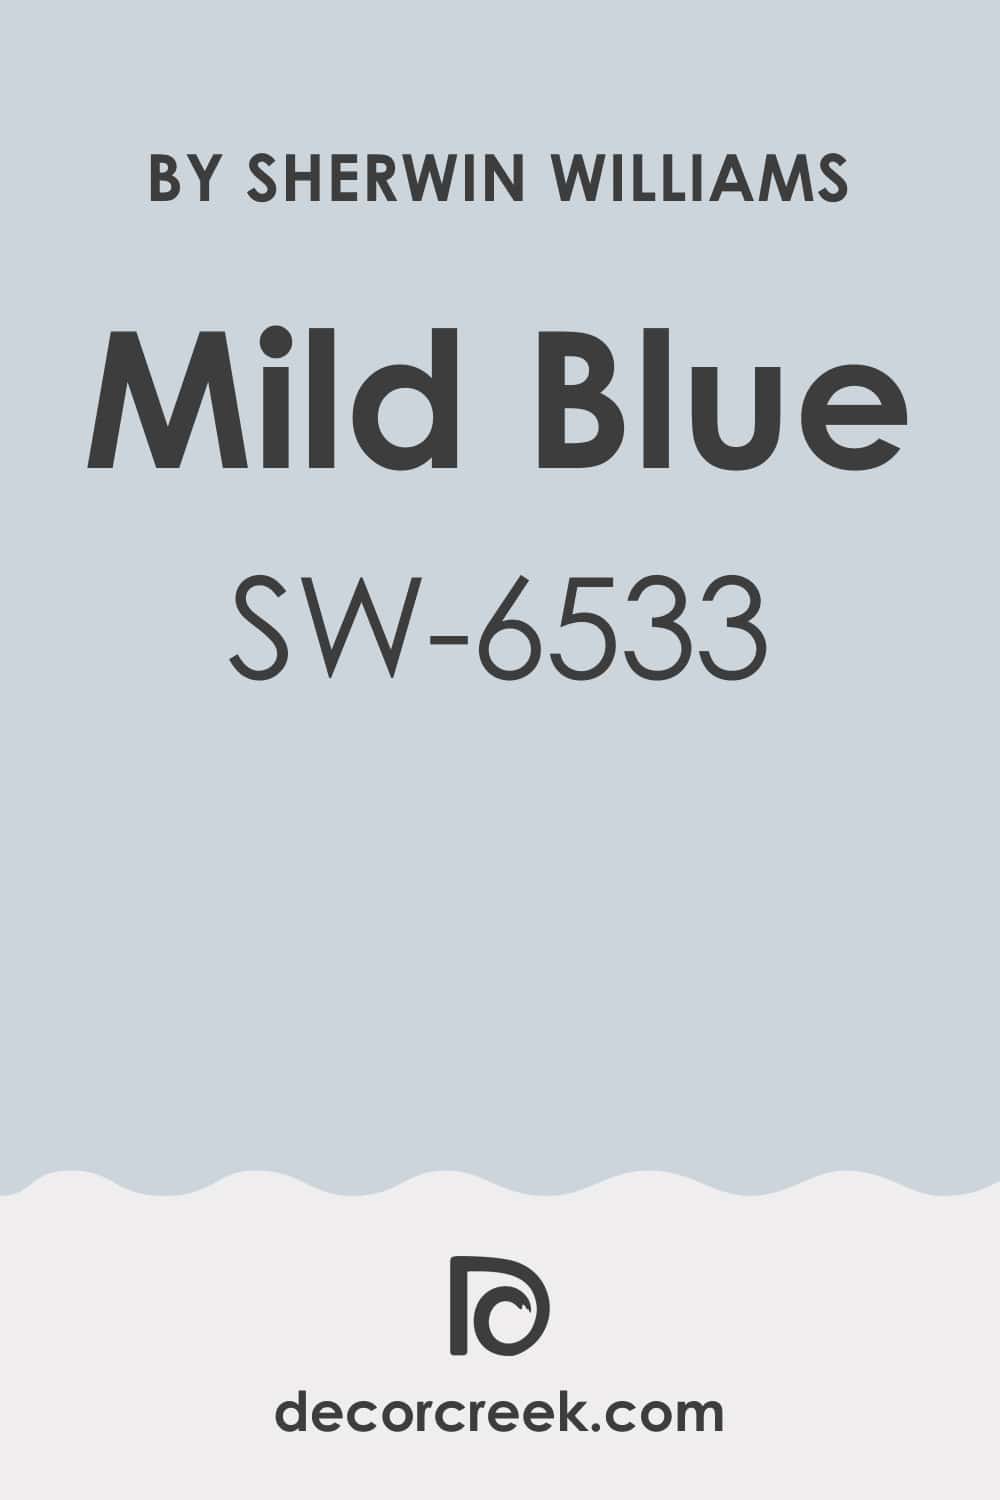 What Kind of Color Is Mild Blue SW-6533?